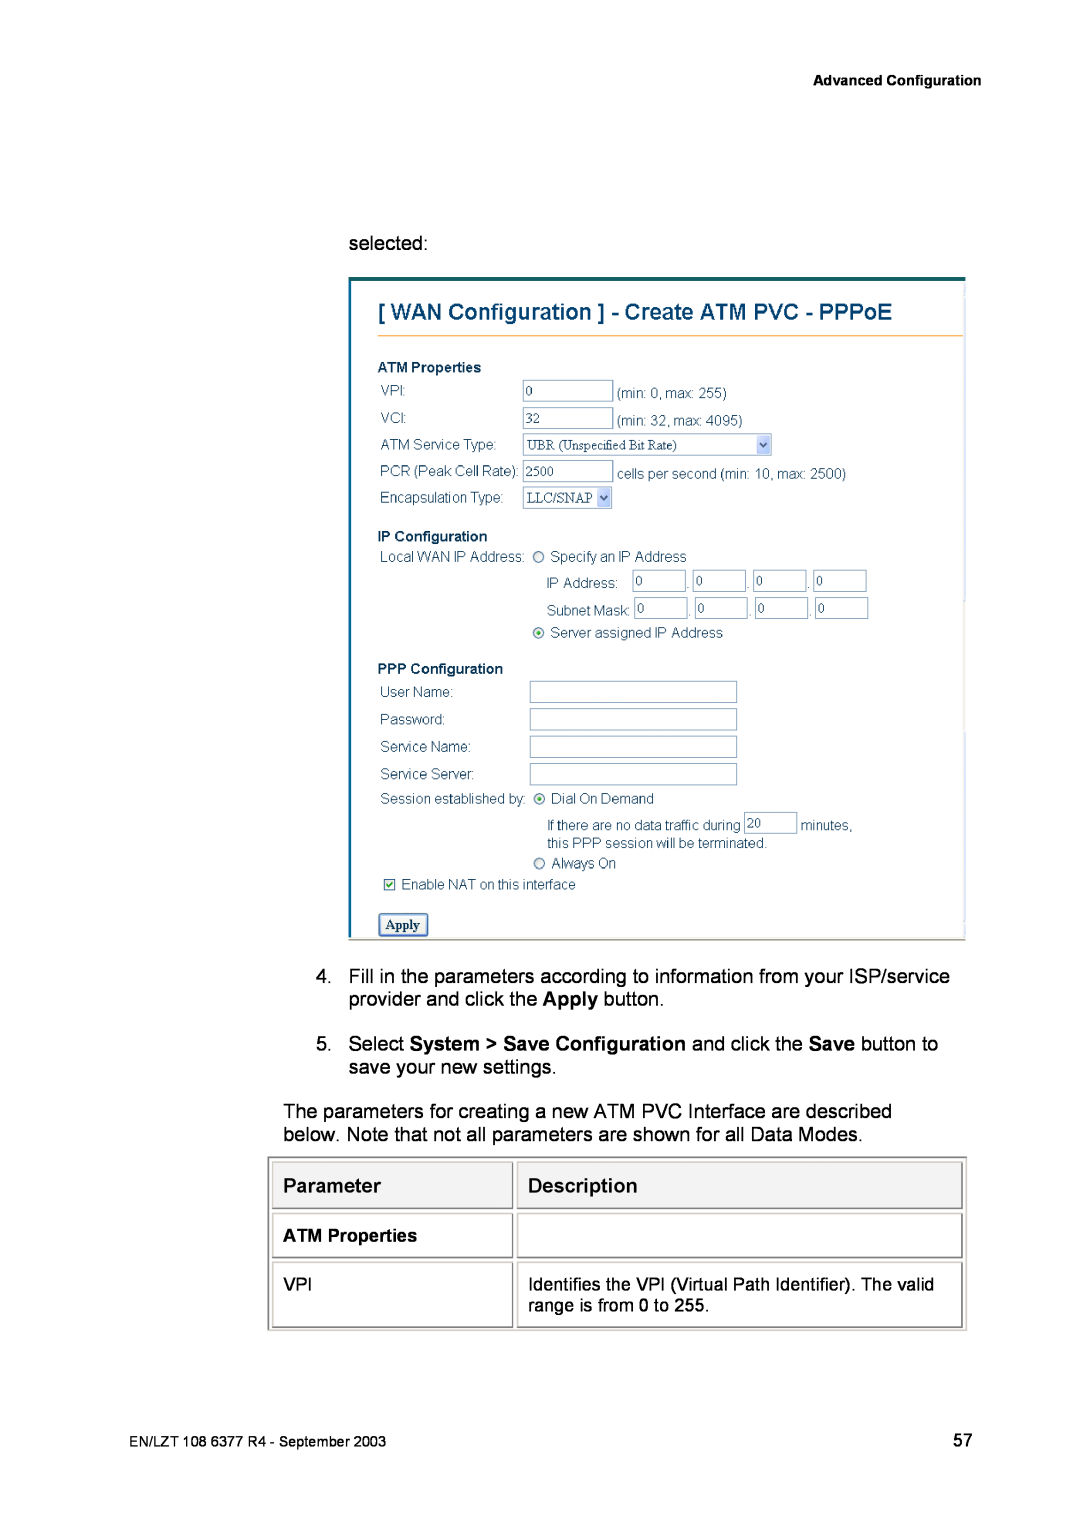 Garmin HN294DP/DI manual selected, Parameter, Description 